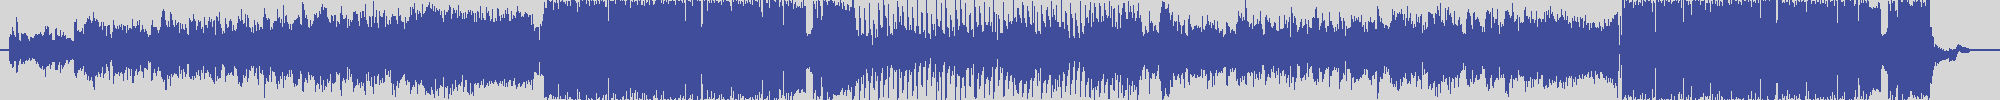 suxess [SX001] Alex Gaudino - No More [Bottai Edit] audio wave form